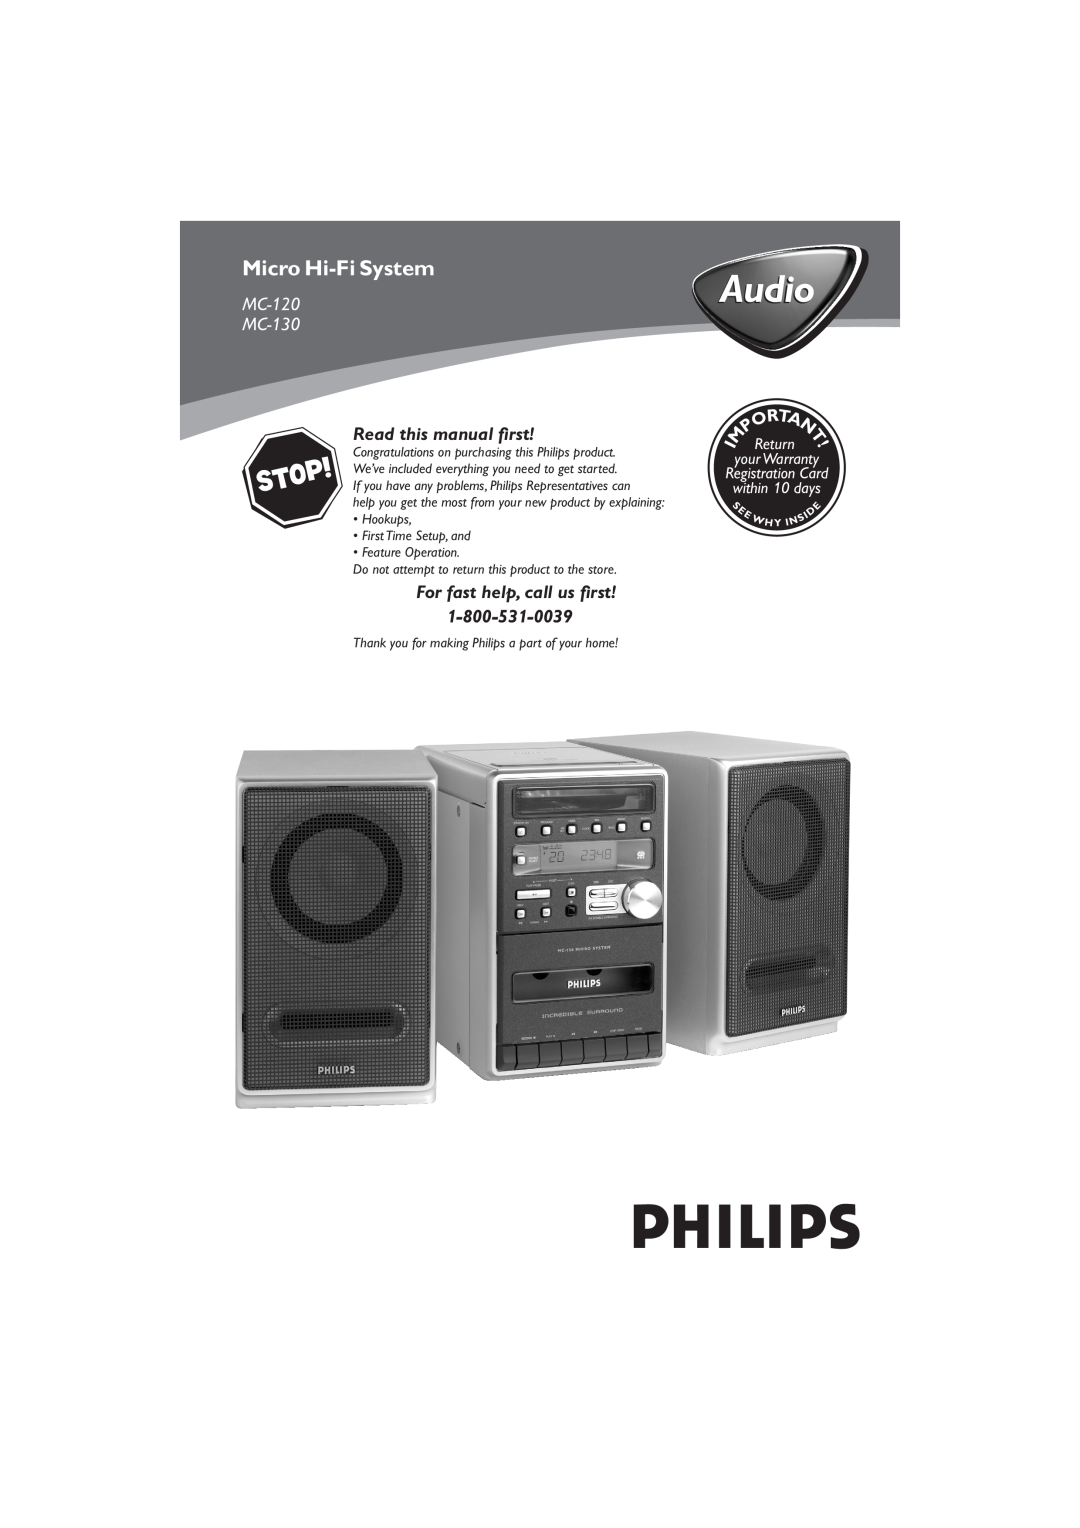 Philips warranty MC-120 MC-130, Audio, Micro Hi-FiSystem, Hookups First Time Setup, and, Feature Operation, Return 